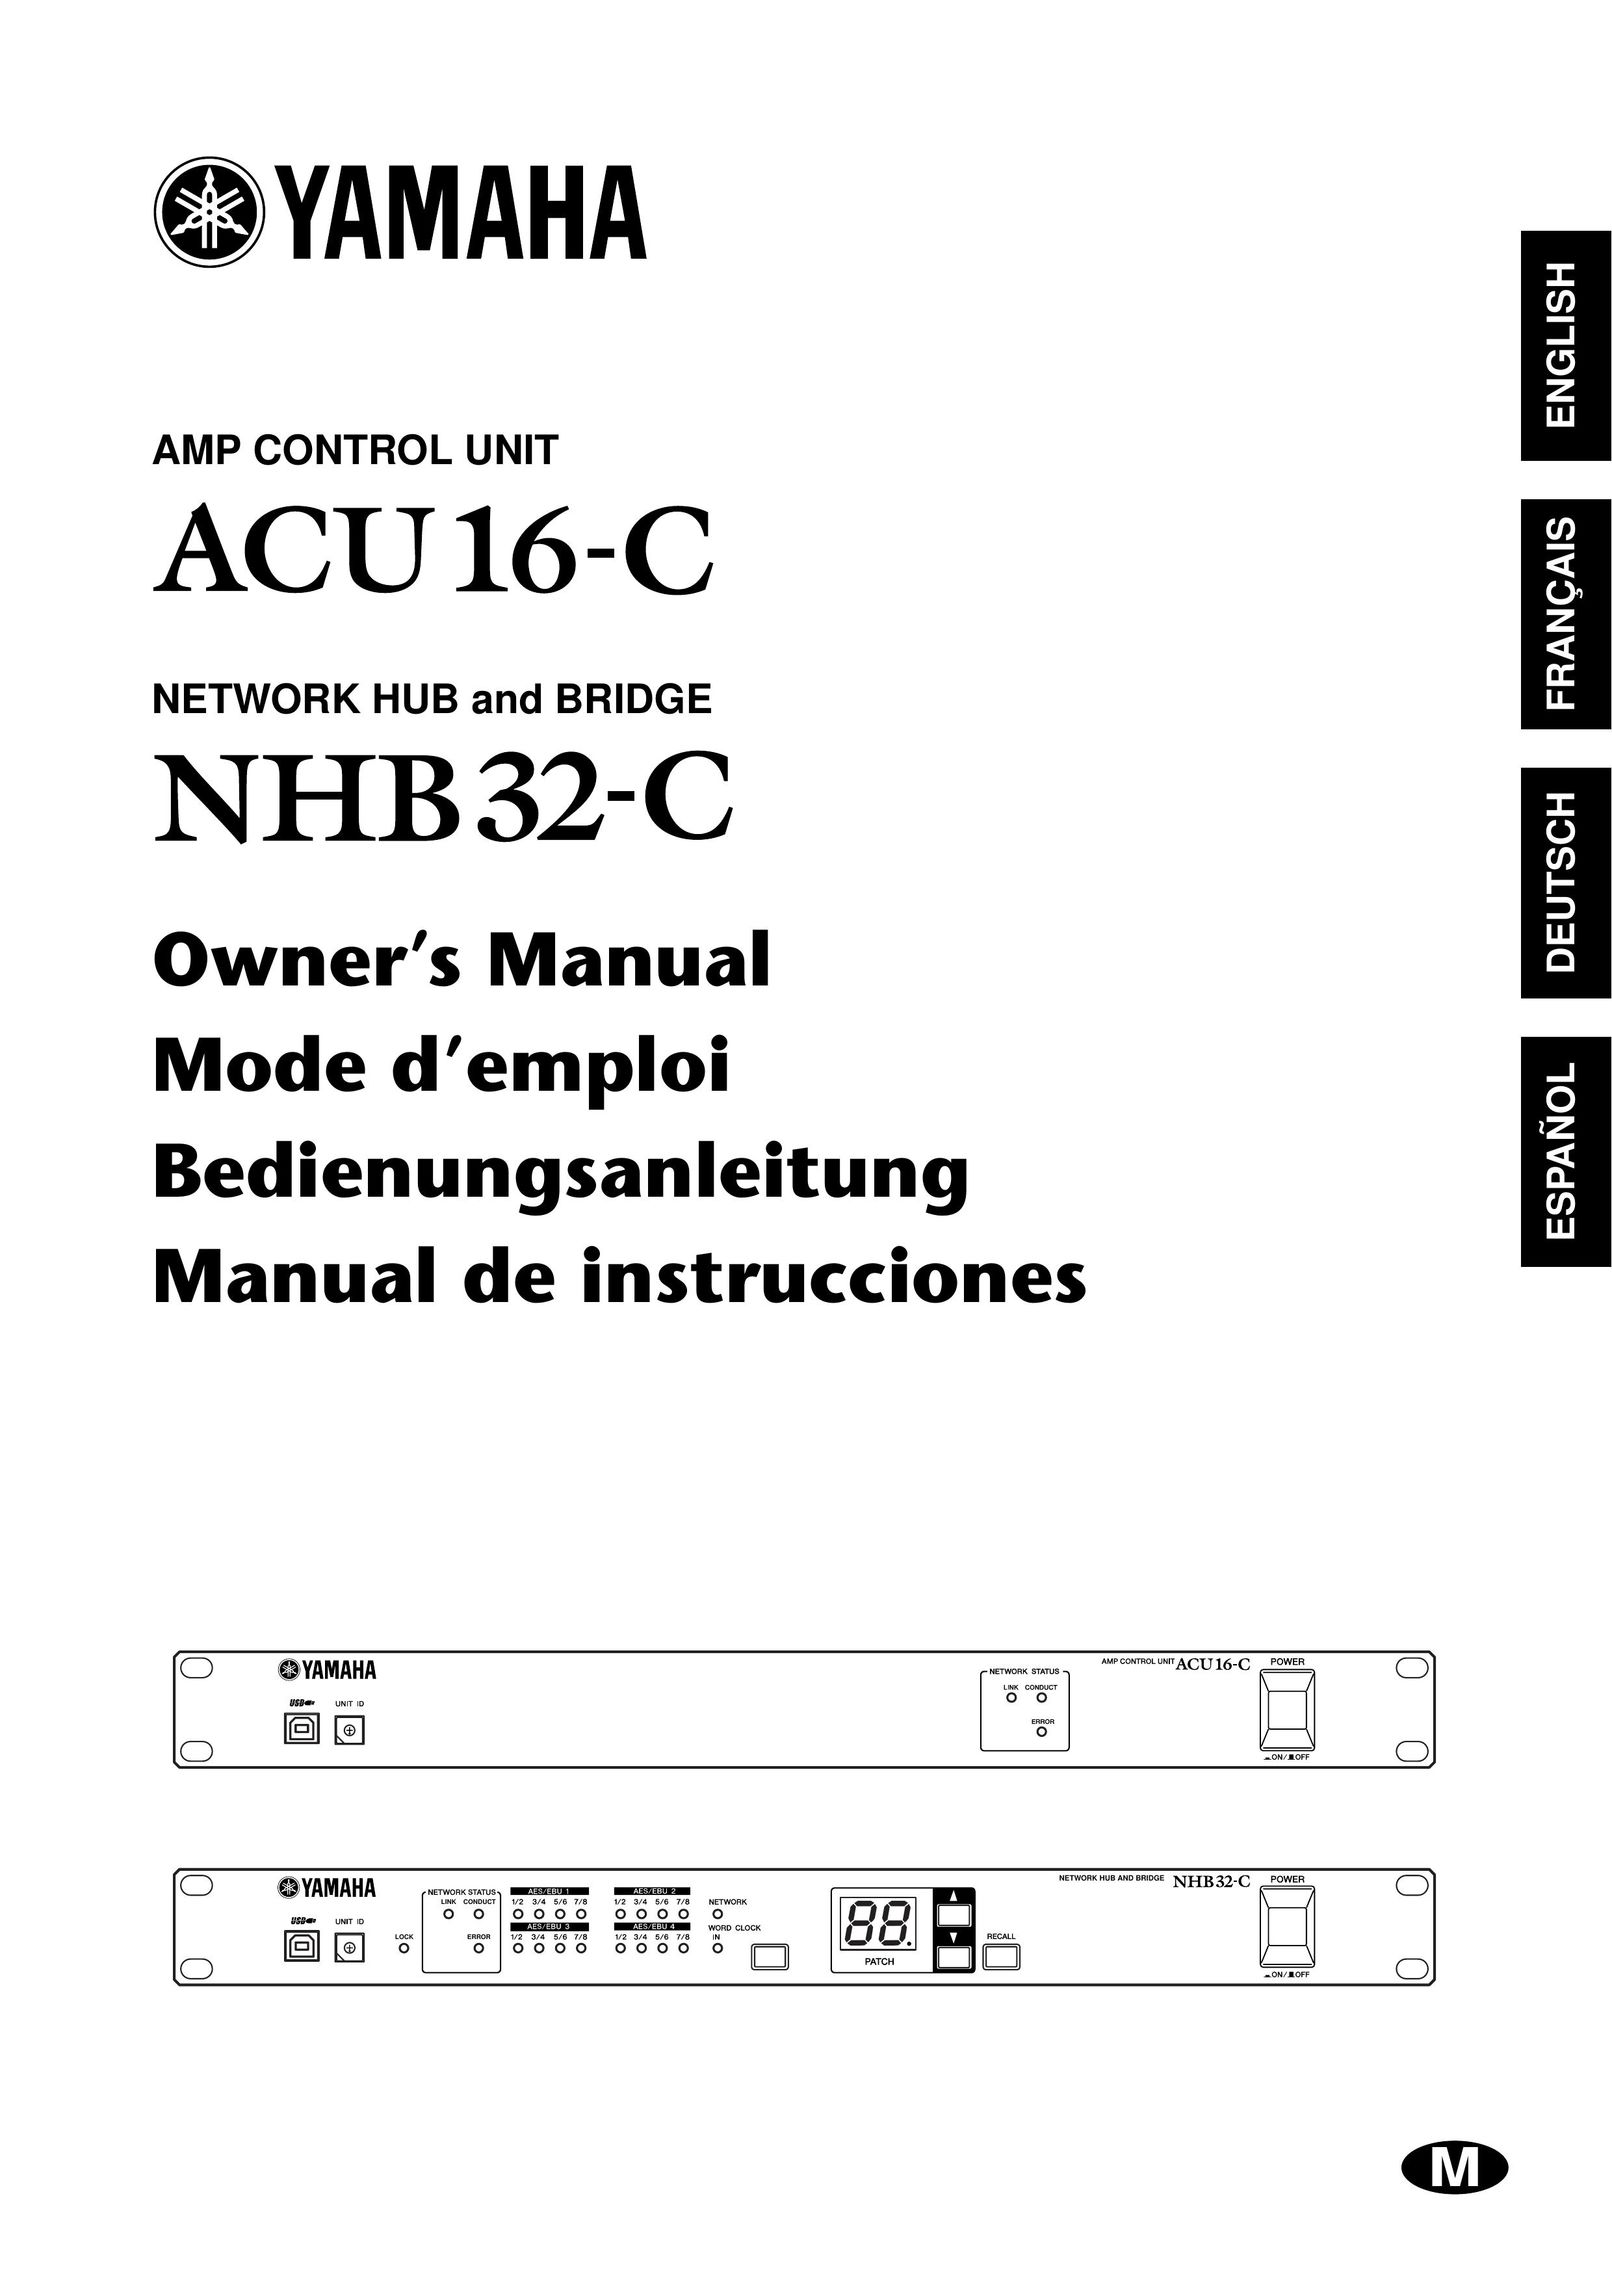 Yamaha ACU16-C Switch User Manual